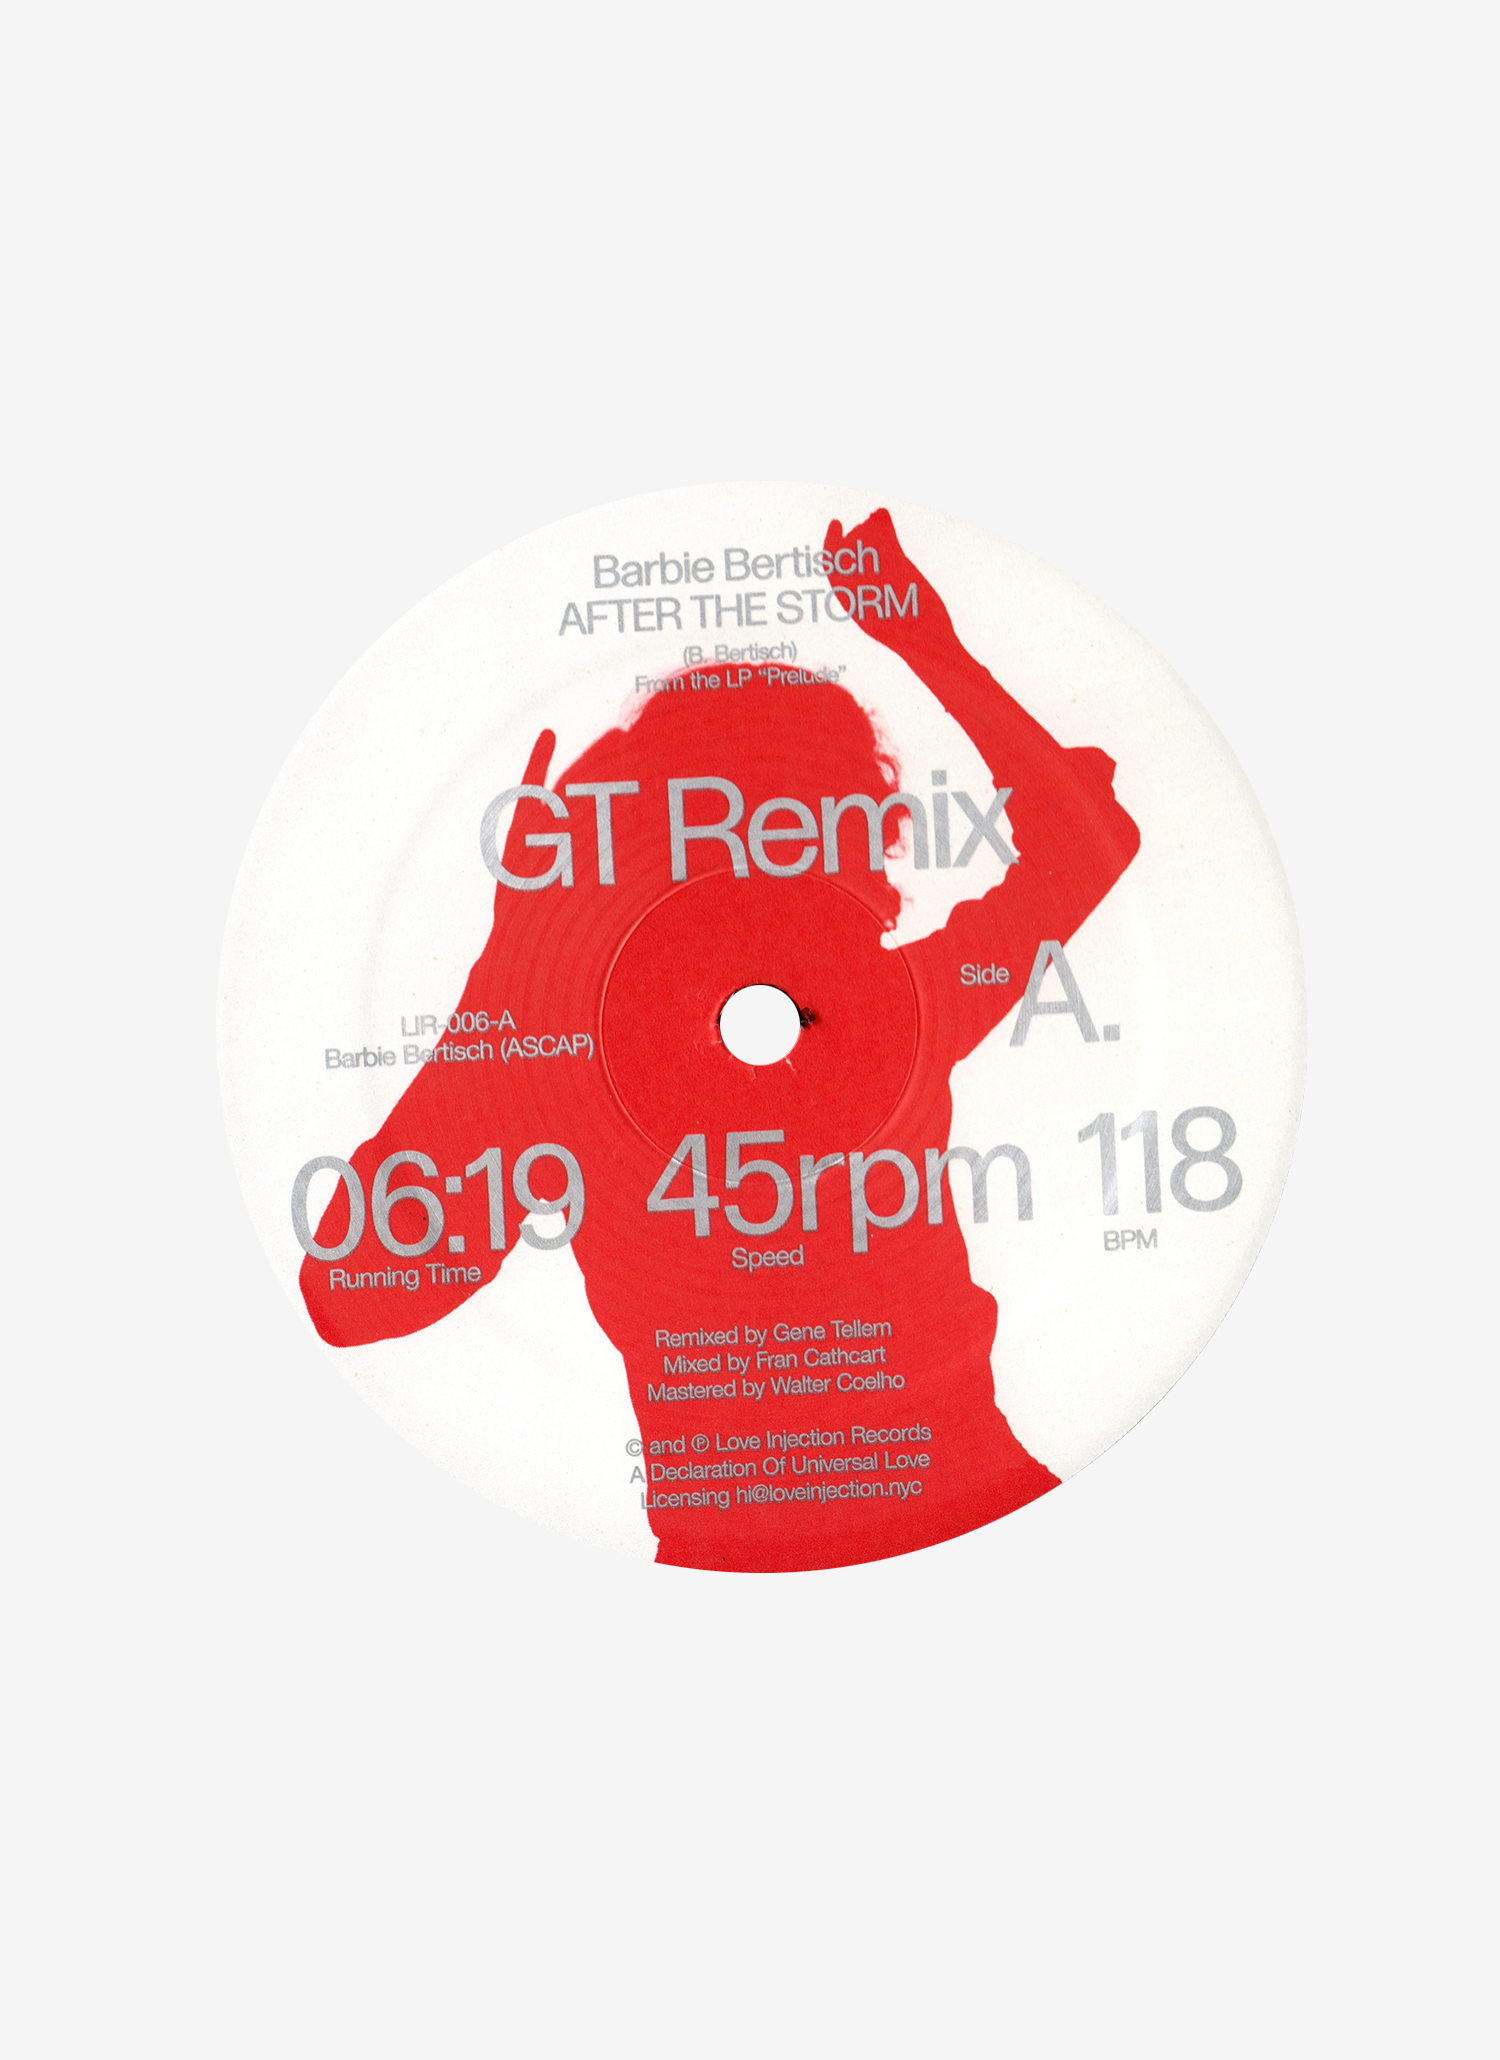 Prelude Remixes 12" Single feat. Gene Tellem Tama Sumo & Lakuti